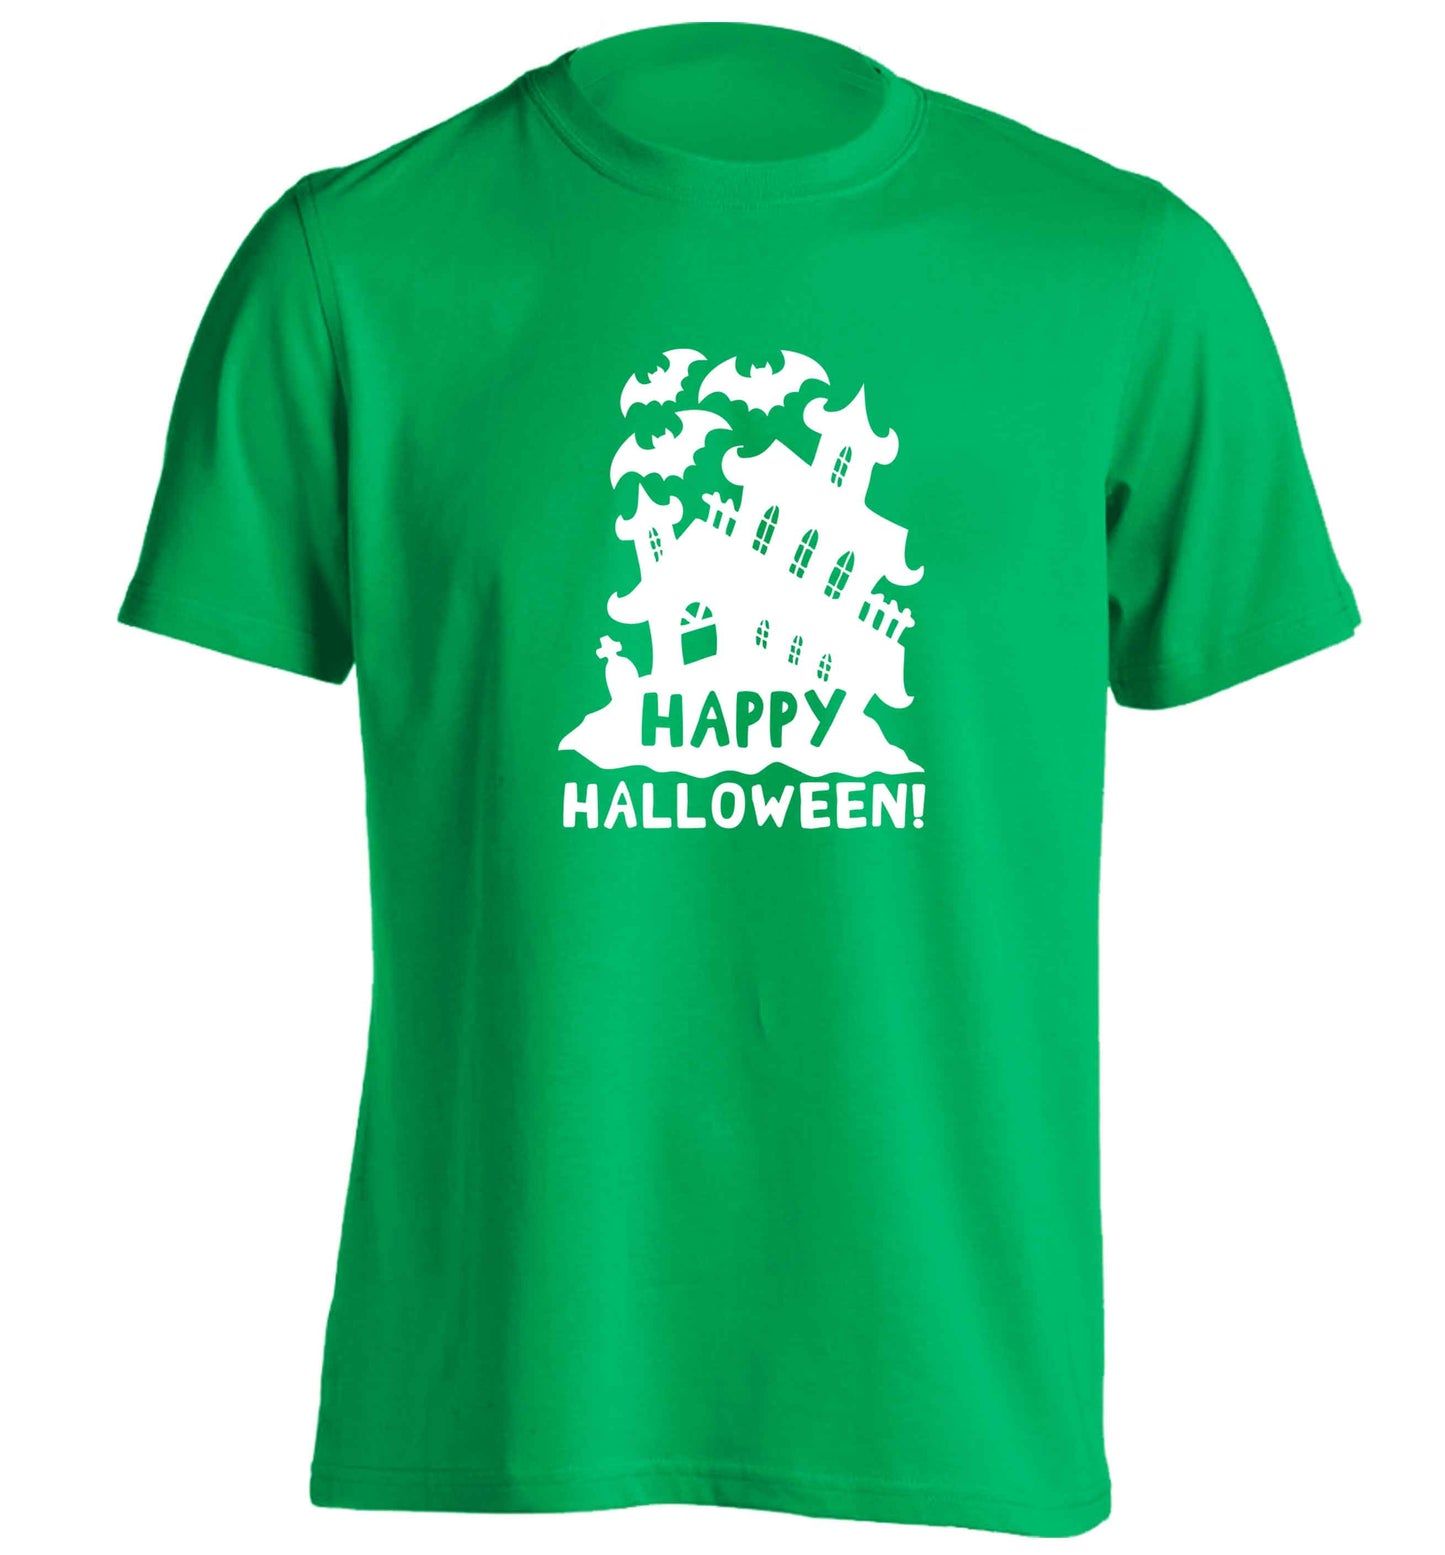 Happy halloween - haunted house adults unisex green Tshirt 2XL